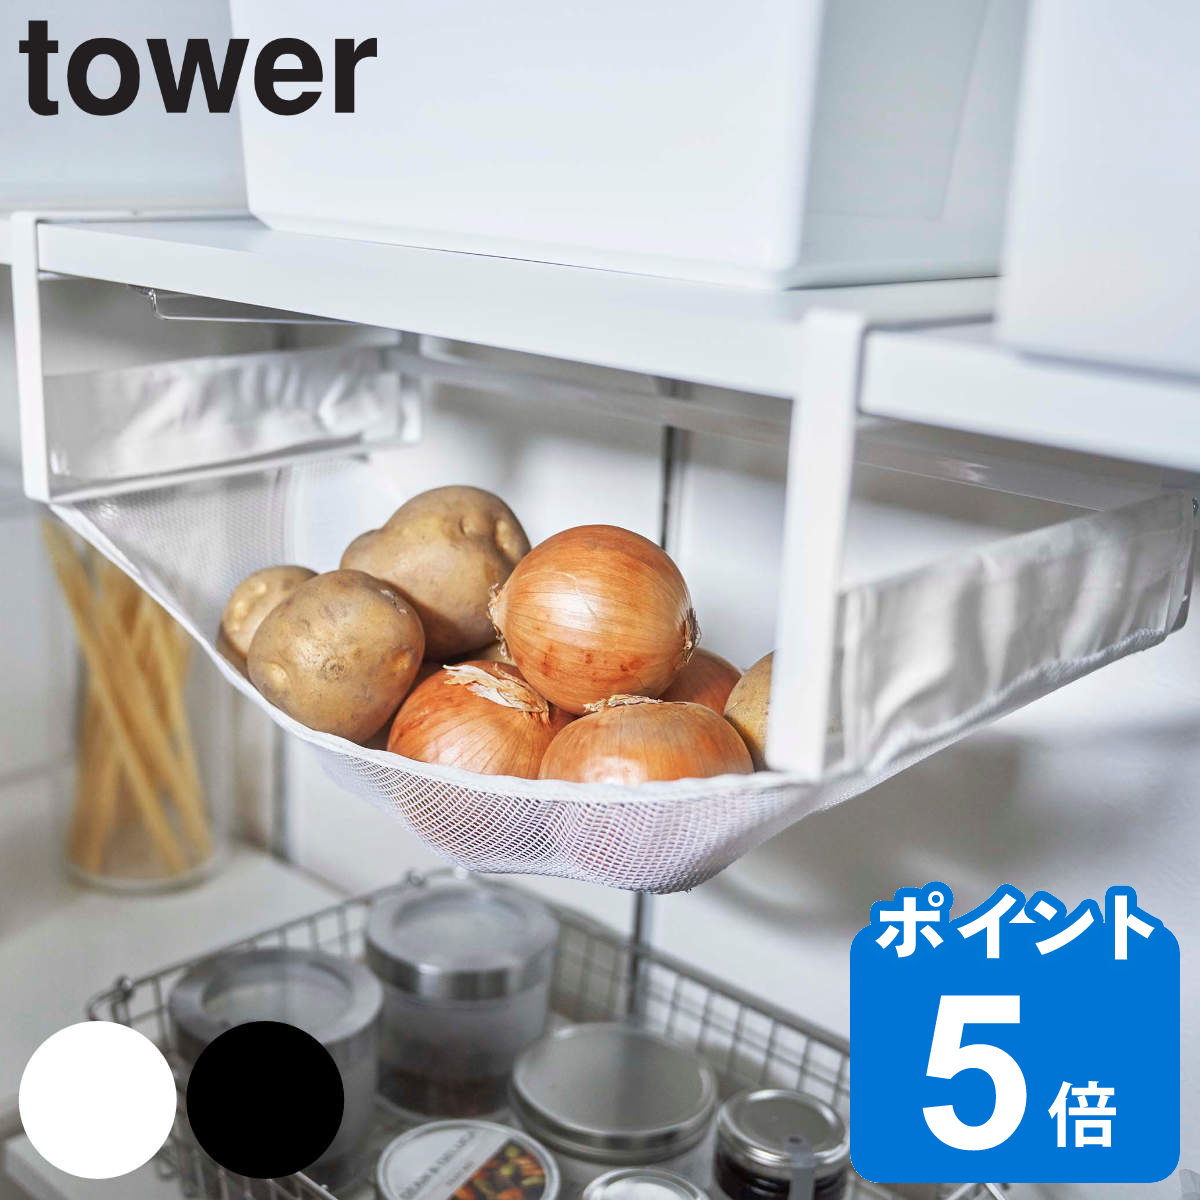 tower 戸棚下野菜収納ネット タワー